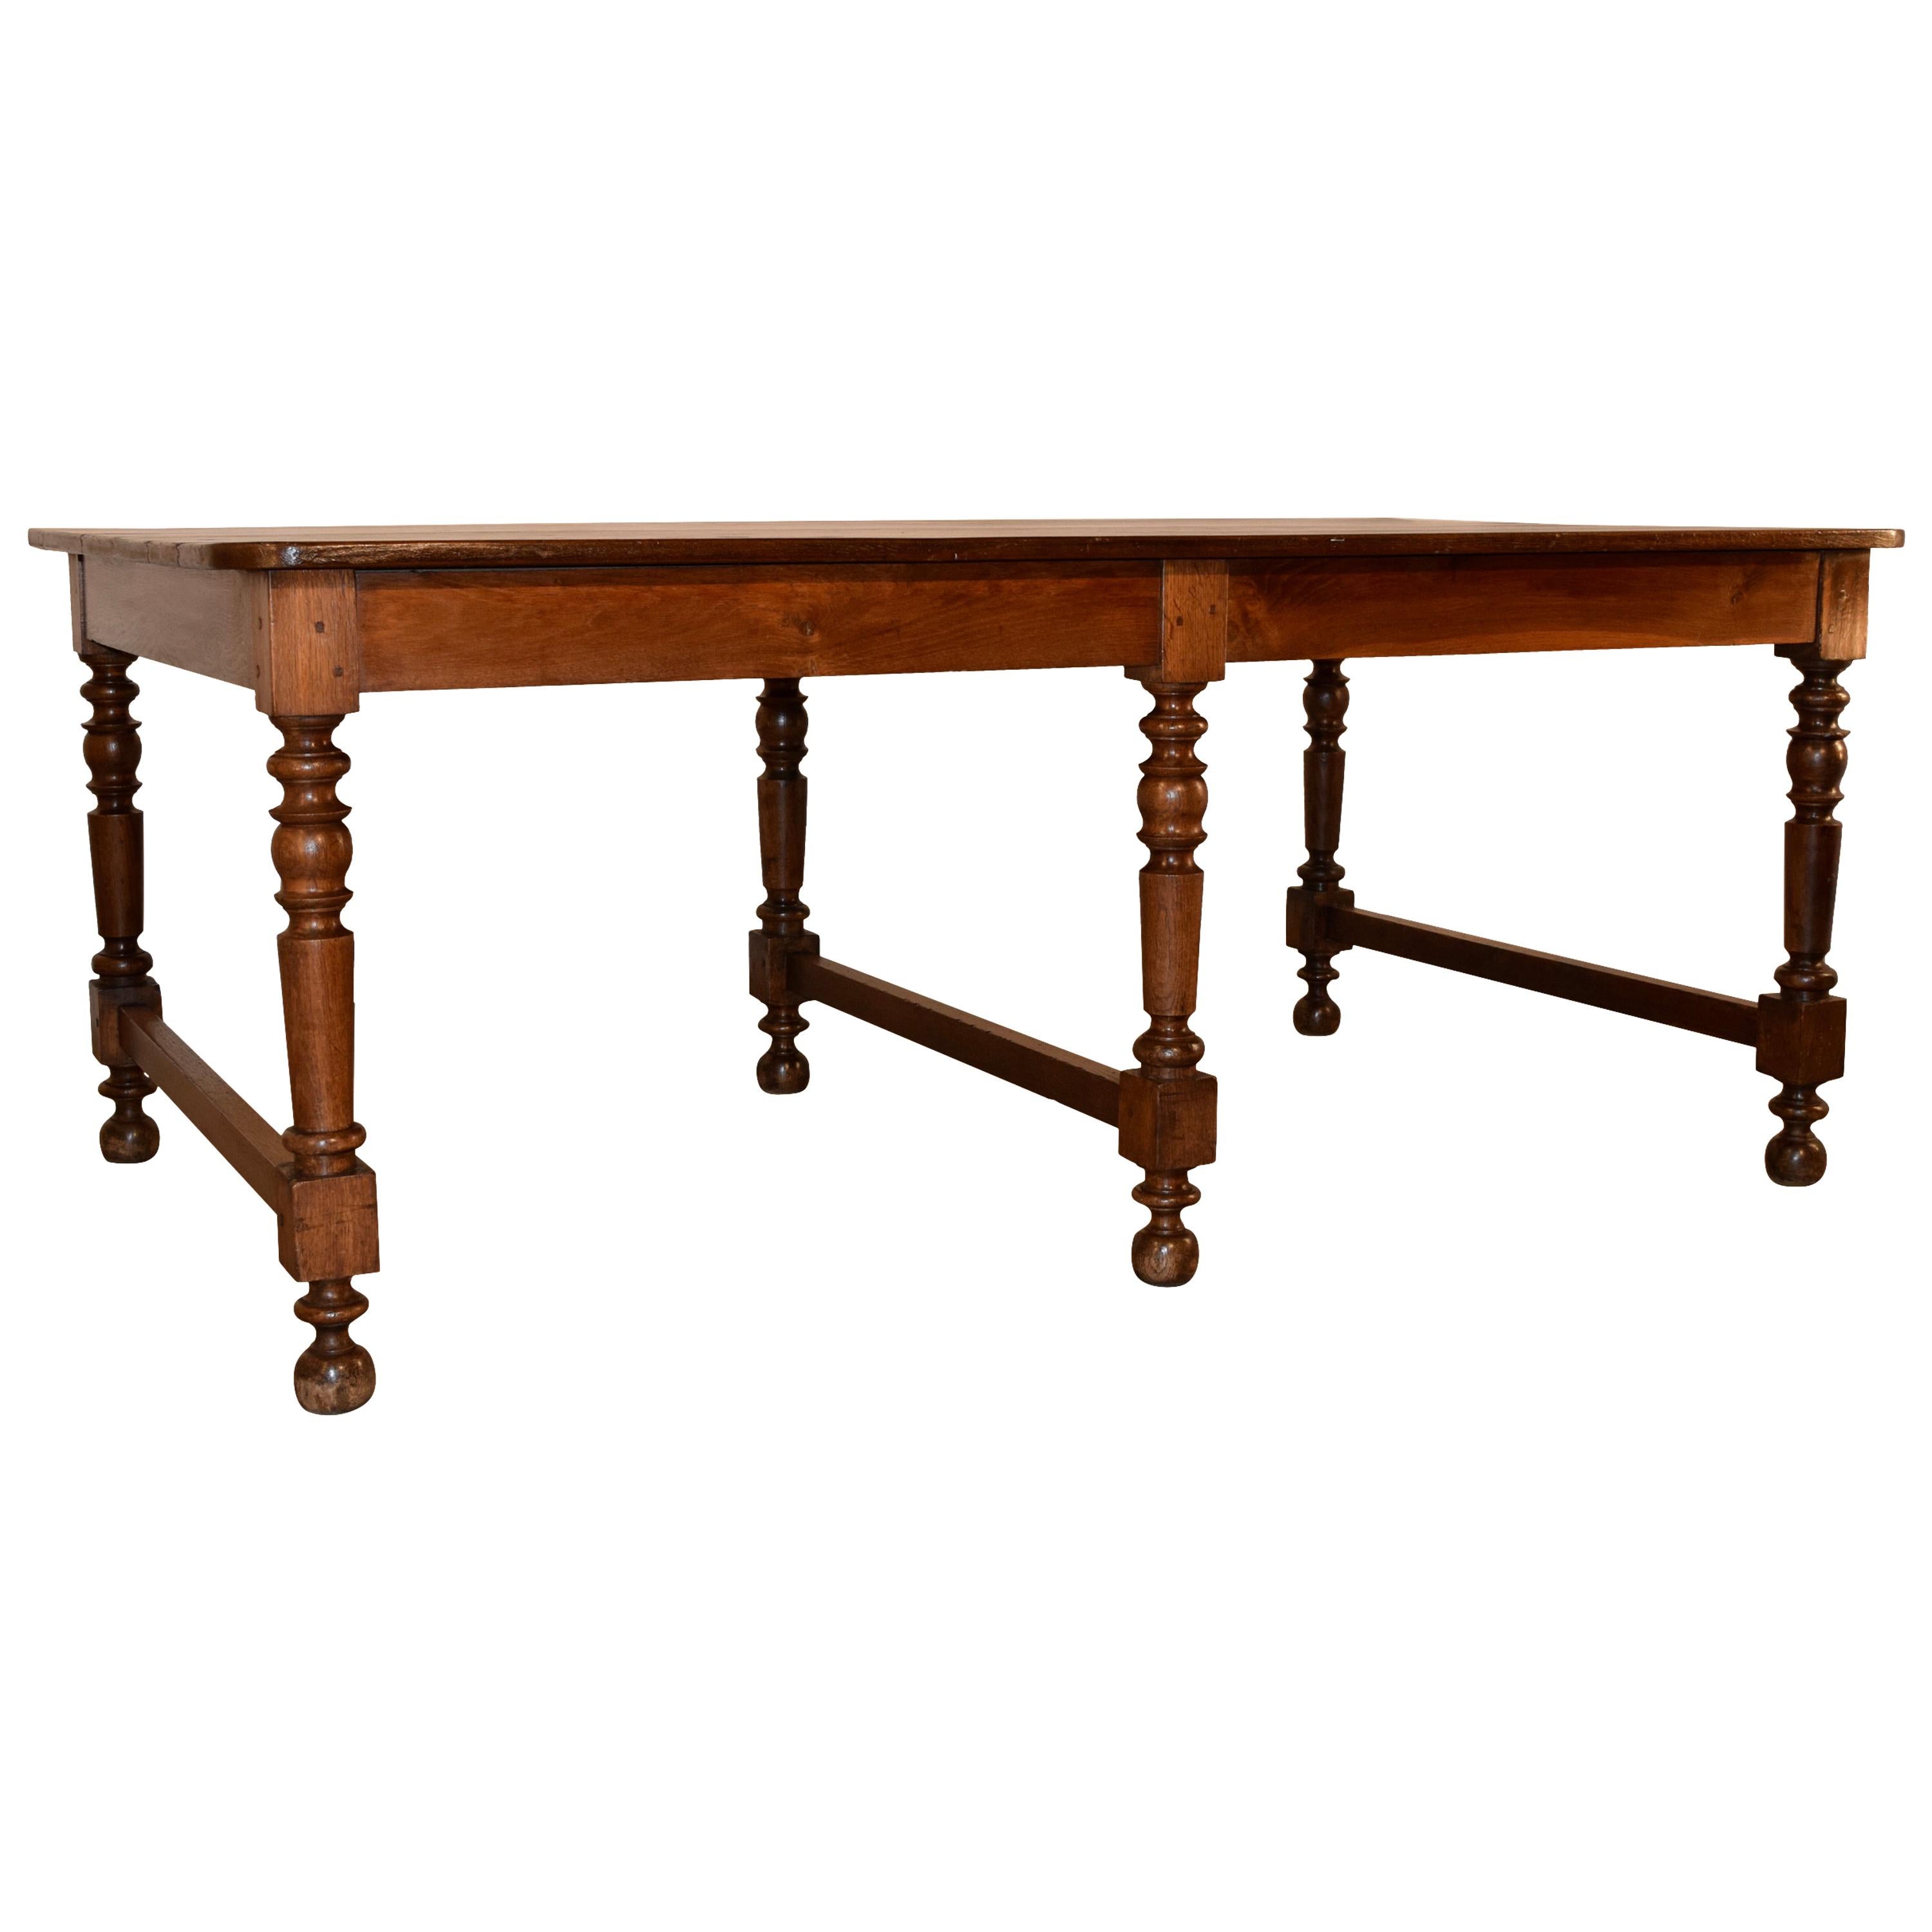 19th Century English Oak Draper's Table